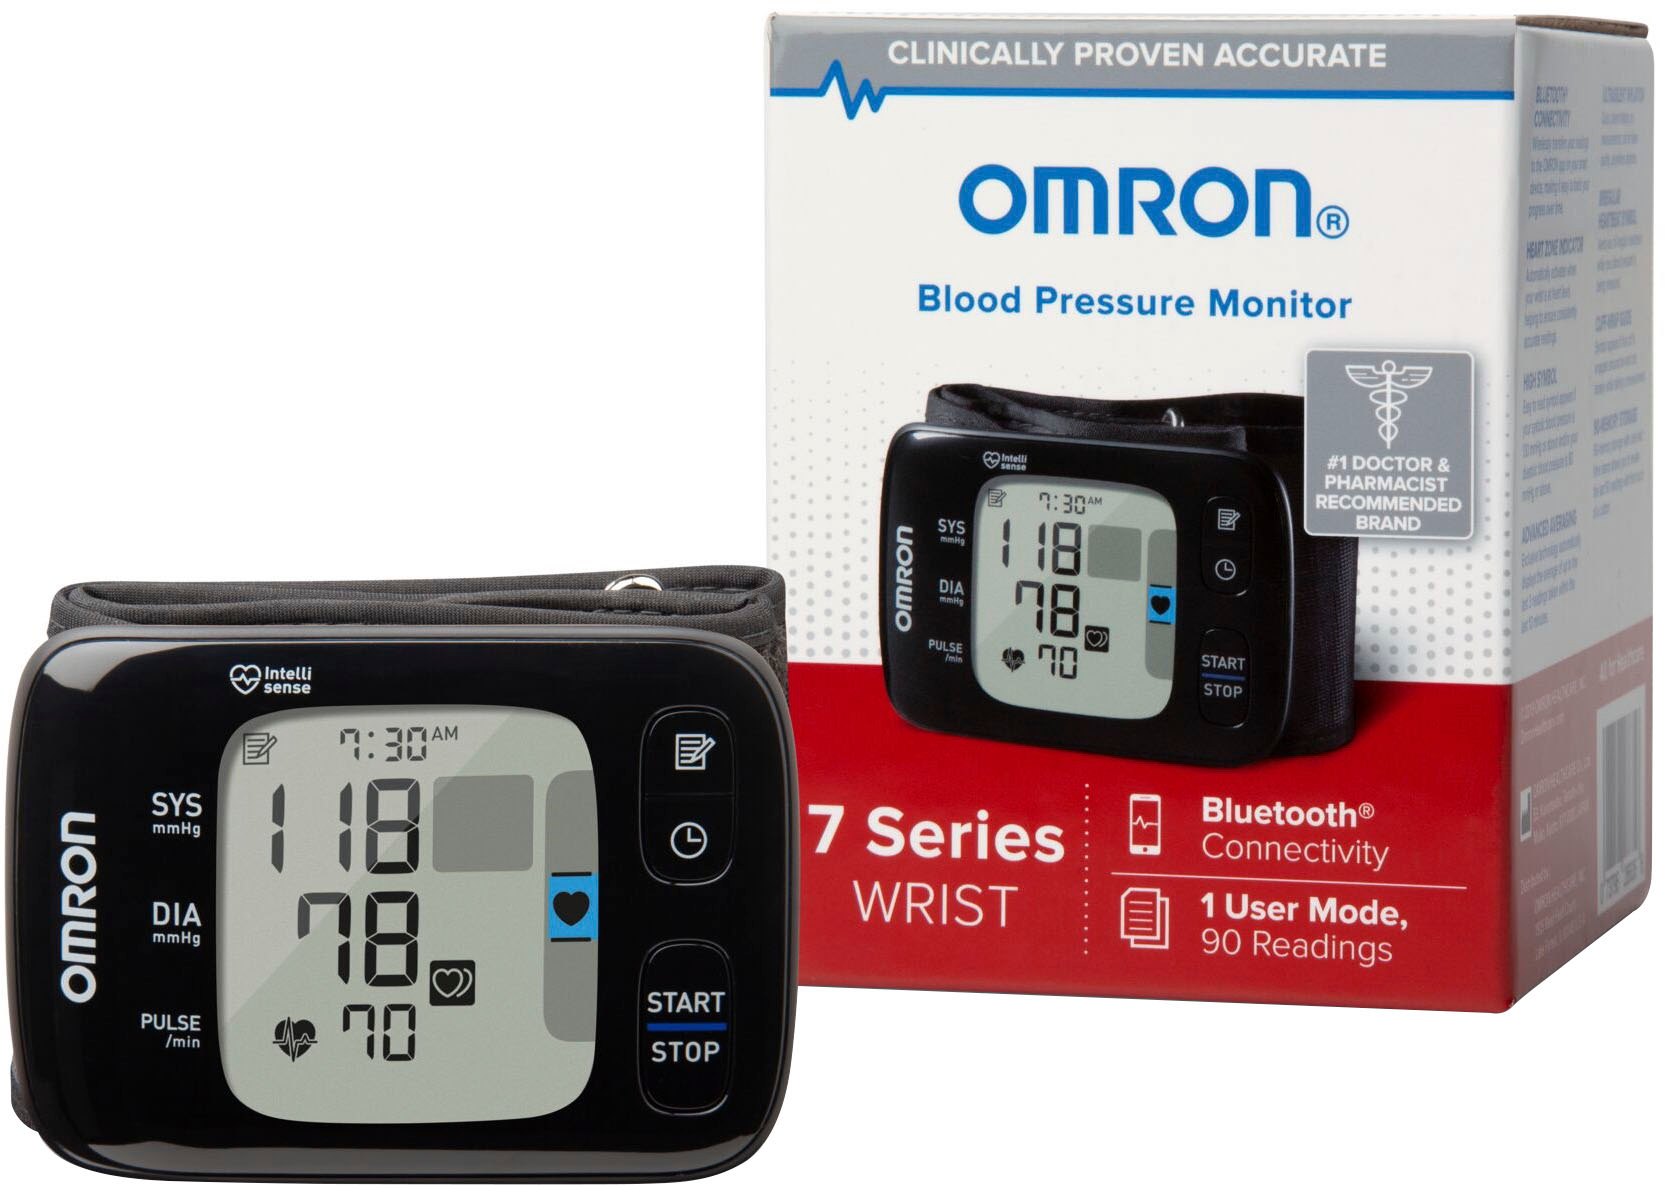 Bluetooth Blood Pressure Monitor, RENPHO Wireless Upper Arm BP Machine for  Home